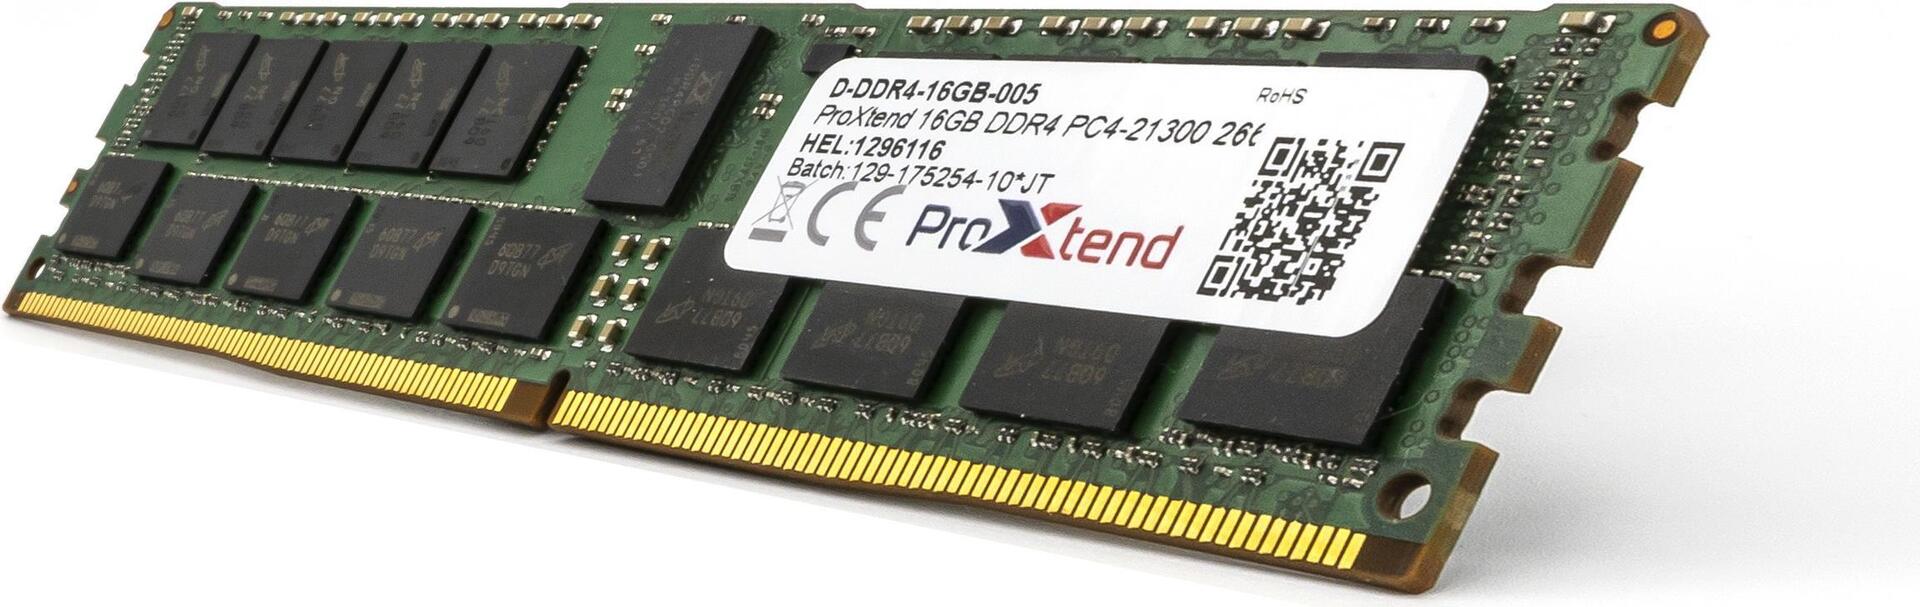 ProXtend D DDR4 16GB 005 Speichermodul 2666 MHz (D DDR4 16GB 005)  - Onlineshop JACOB Elektronik